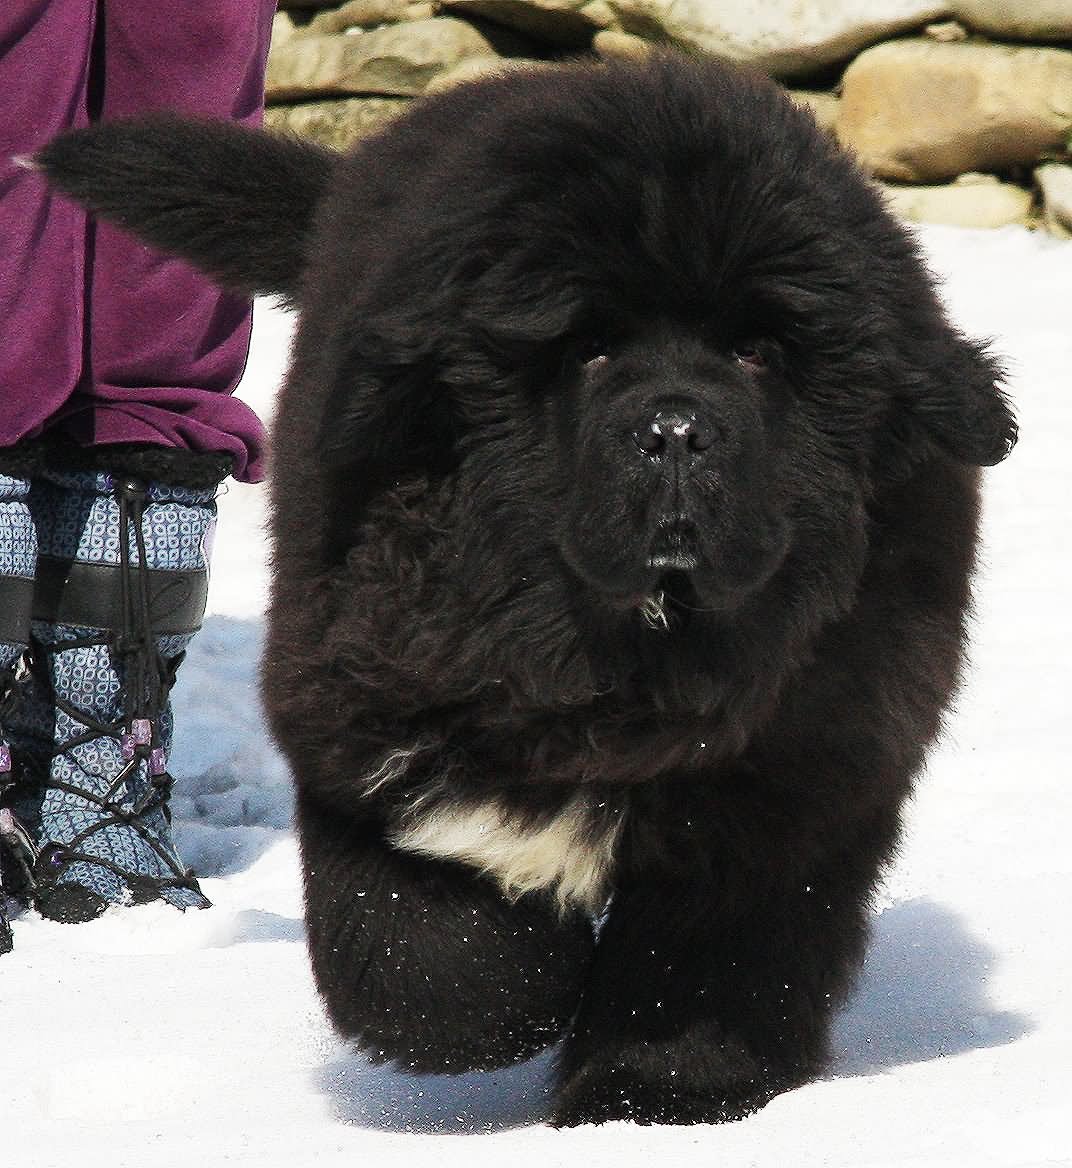 Fluffy Giant Black Newfoundland Dog Walking On Snow